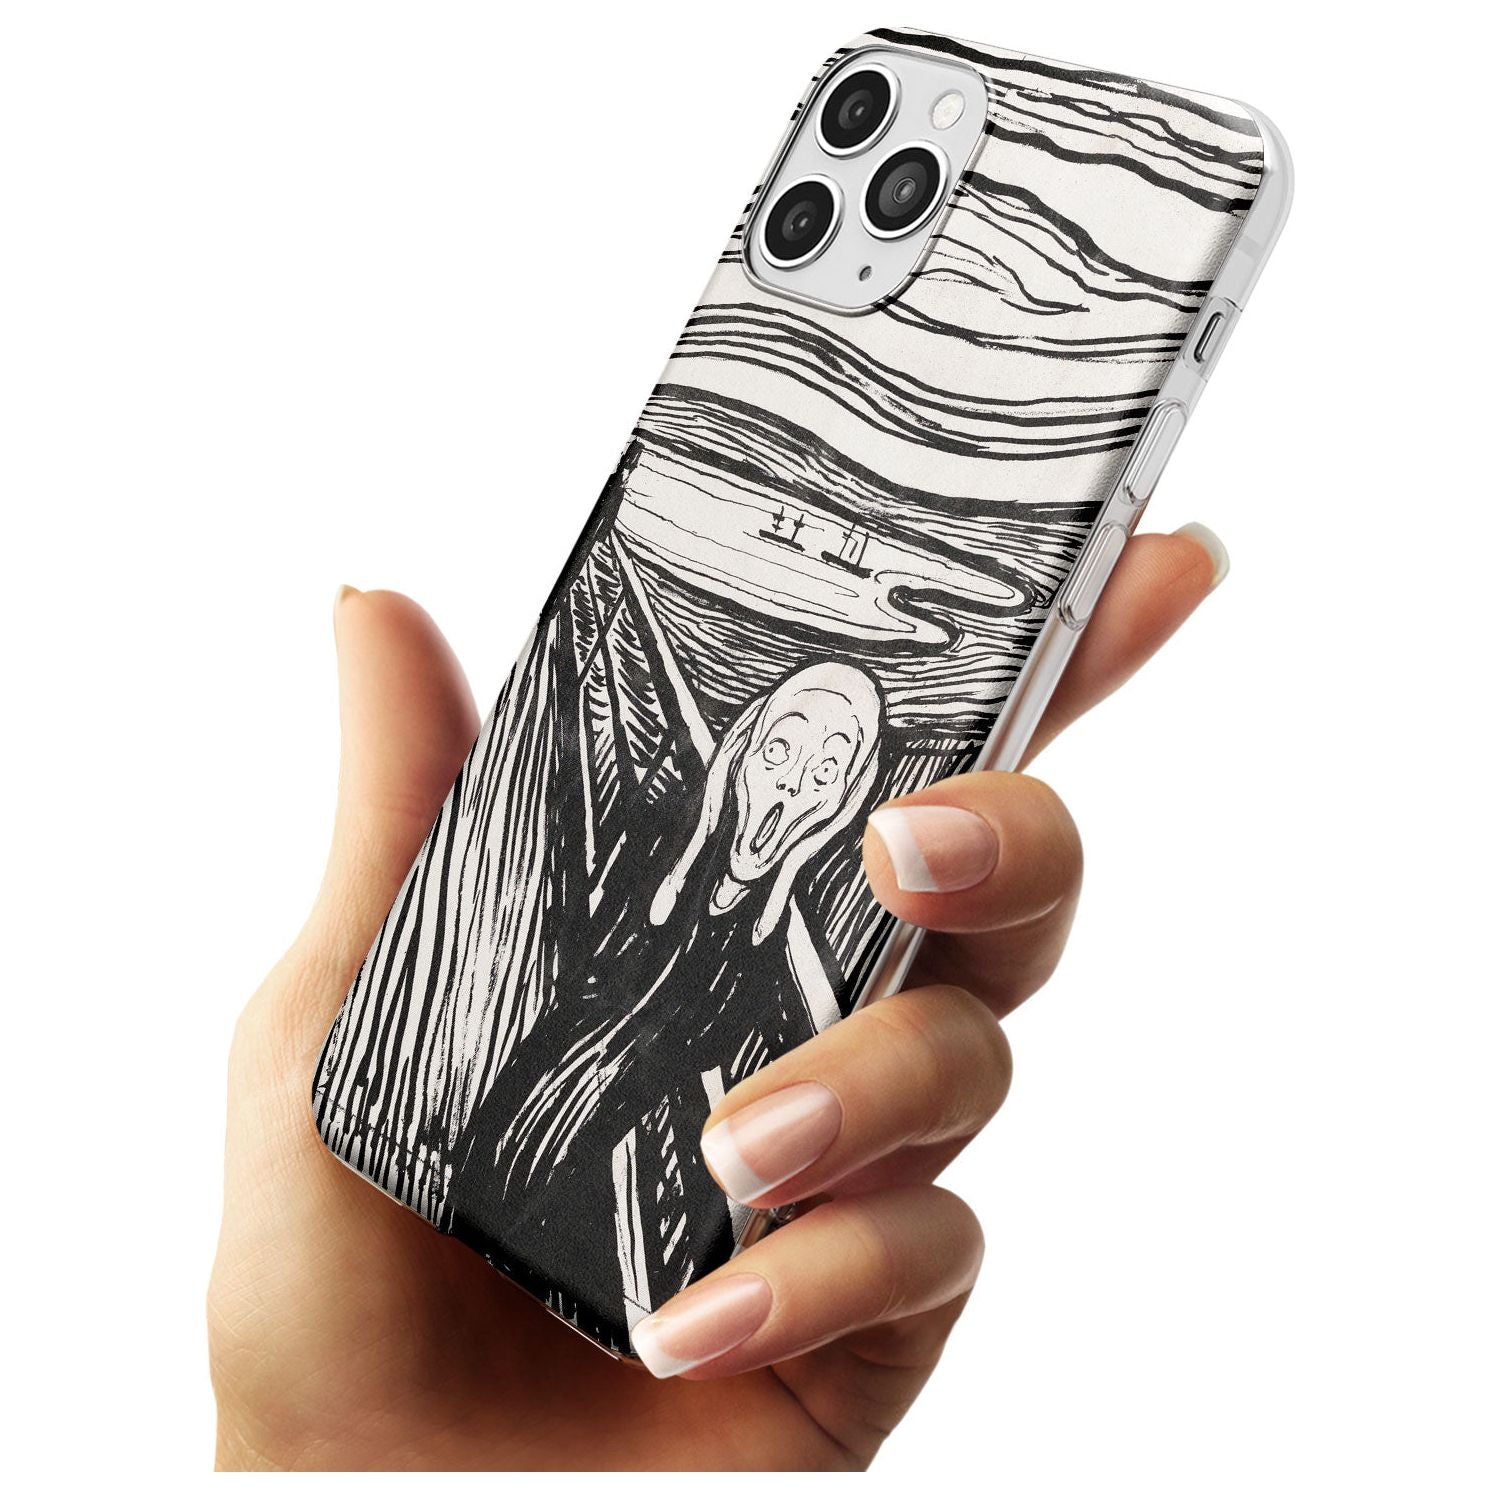 The Scream Slim TPU Phone Case for iPhone 11 Pro Max